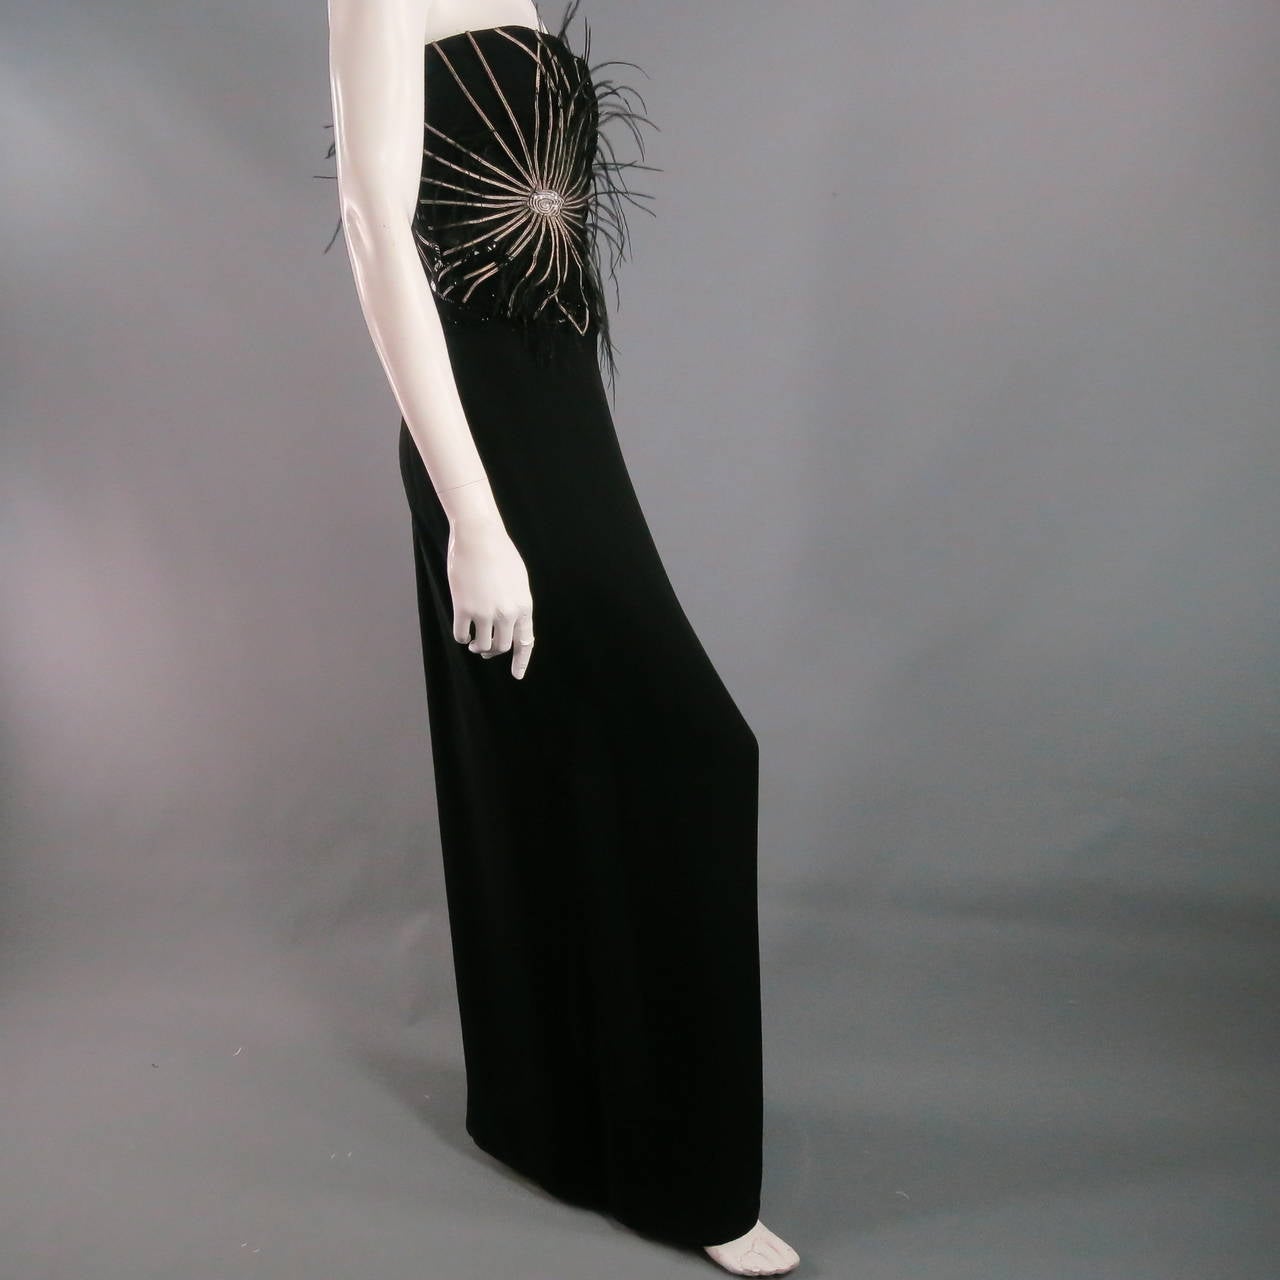 Women's Richard Tyler Dress - Gown - Black Jersey Gown / Evening Wear Dress, 1990s 